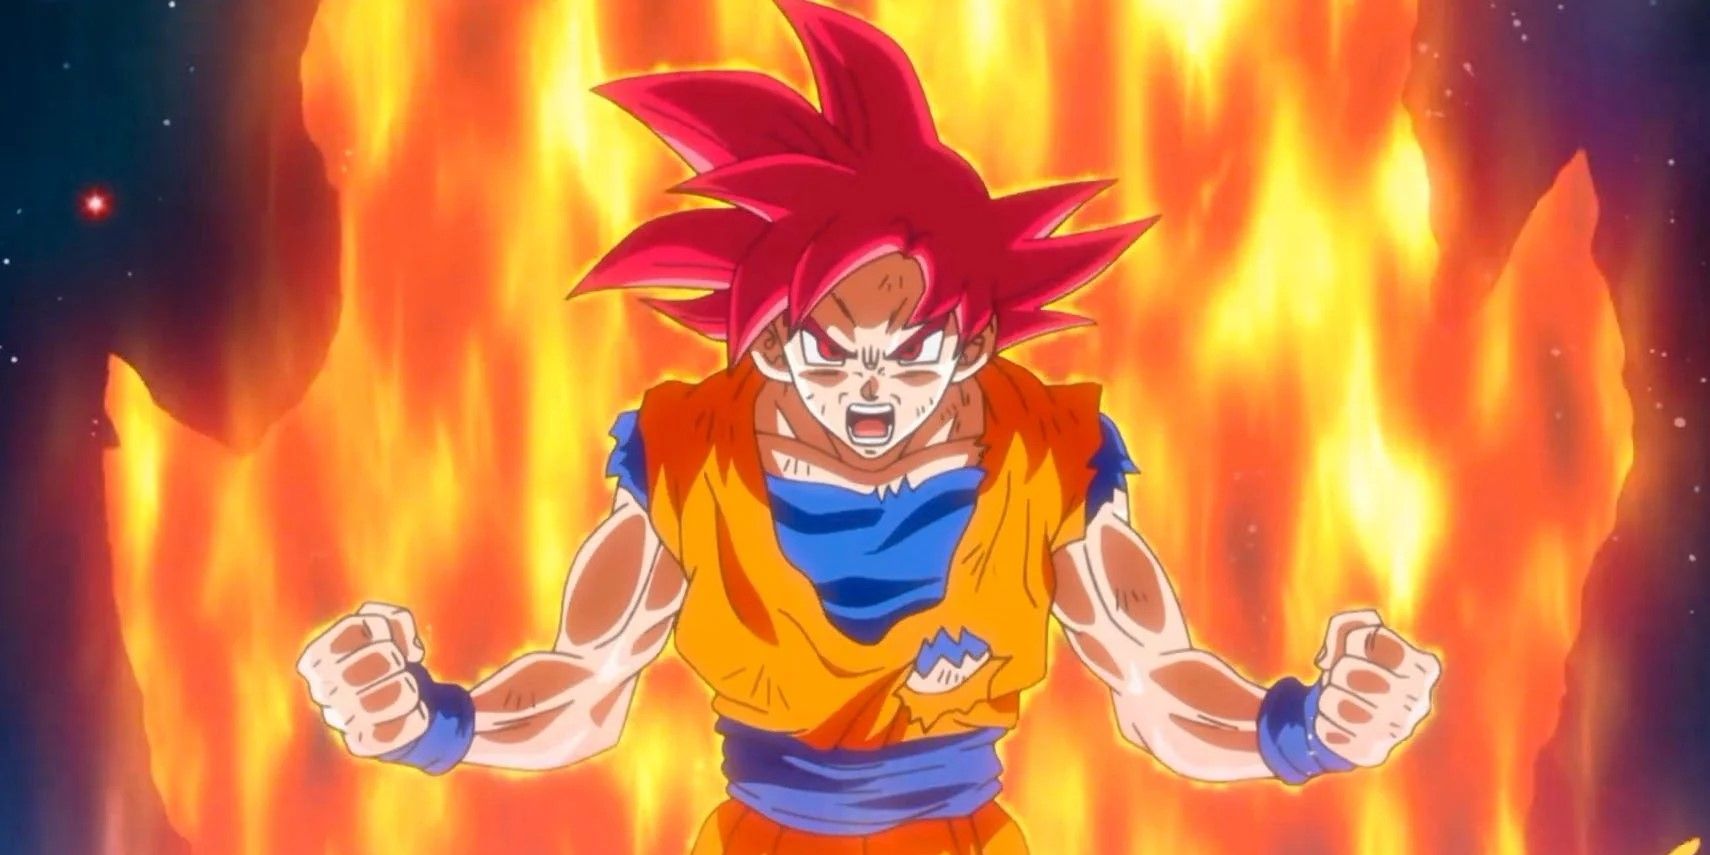 Goku powers up into his Super Saiyan God state in Dragon Ball Super